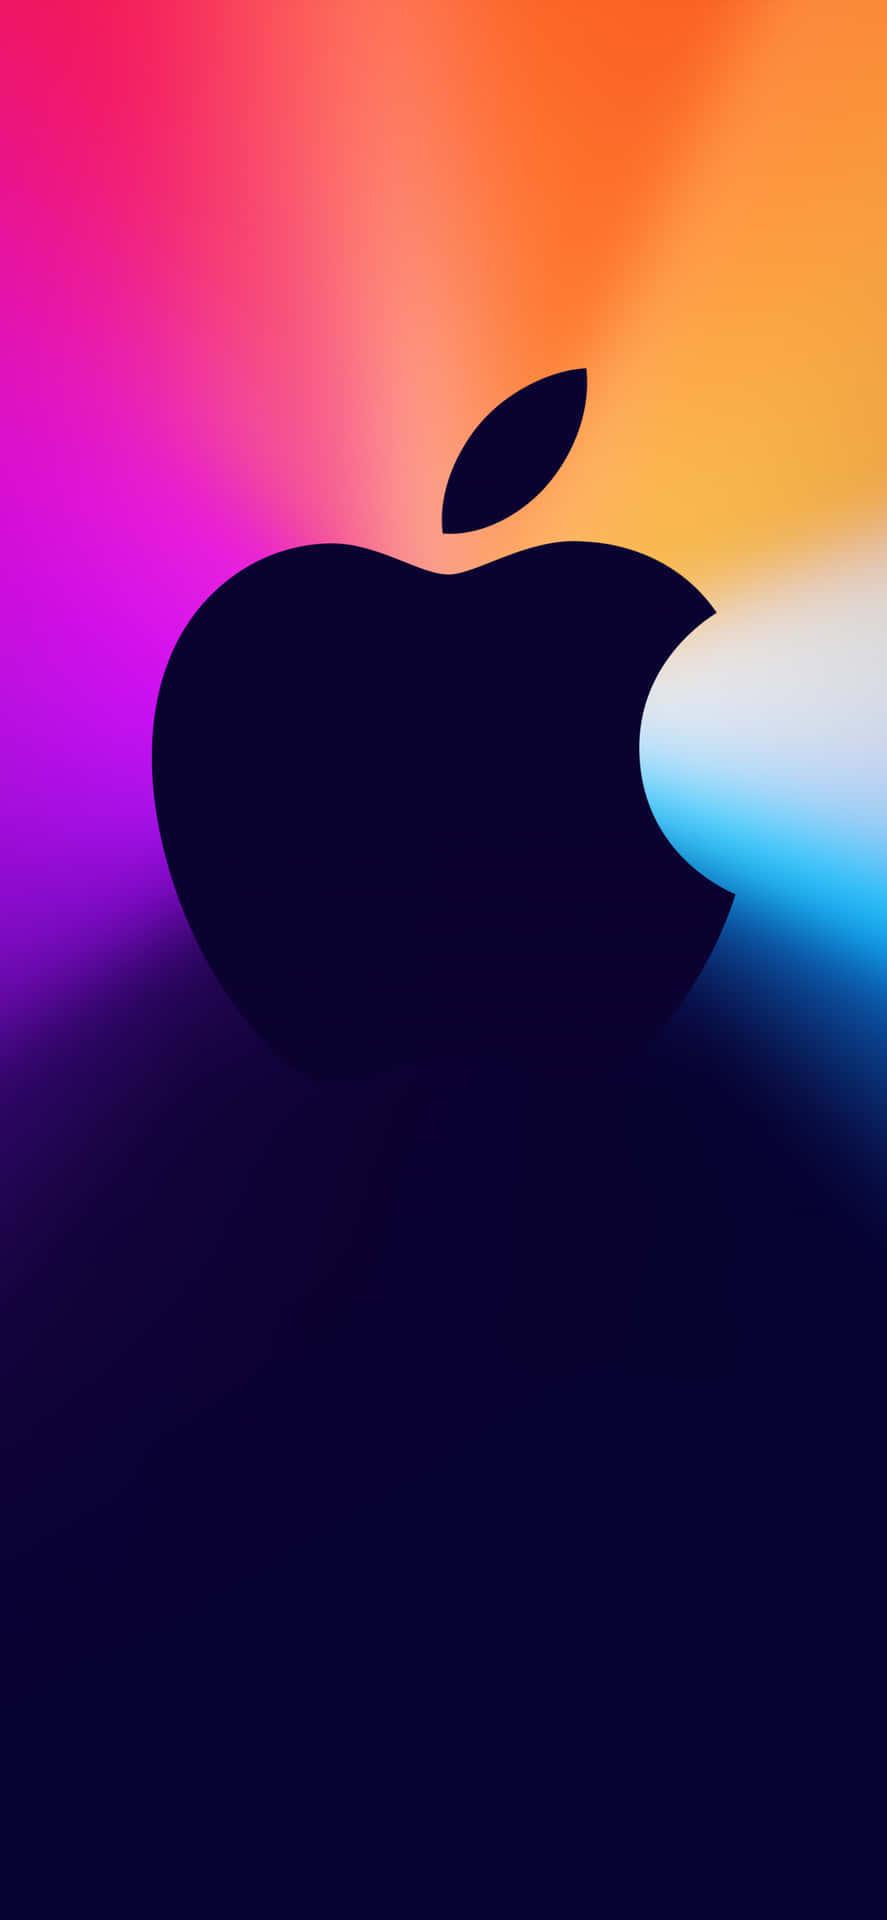 Logotipode Apple Iluminado En El Iphone X. Fondo de pantalla